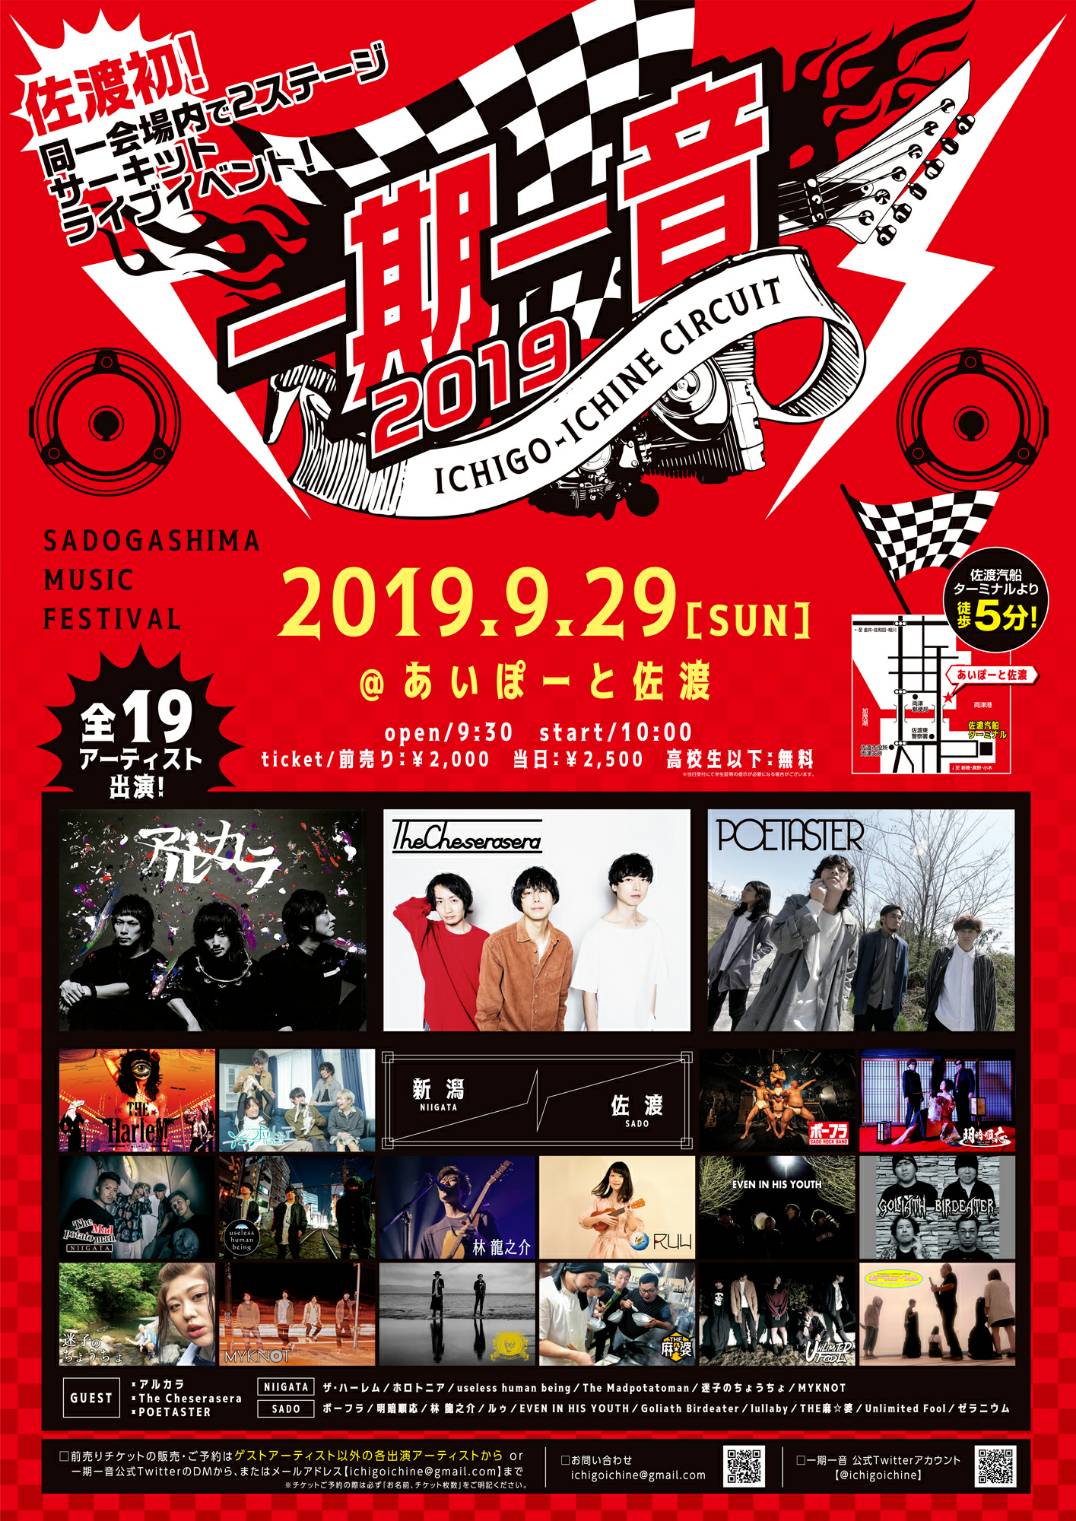 SADOGASHIMA MUSIC FESTIVAL “一期一音 2019”